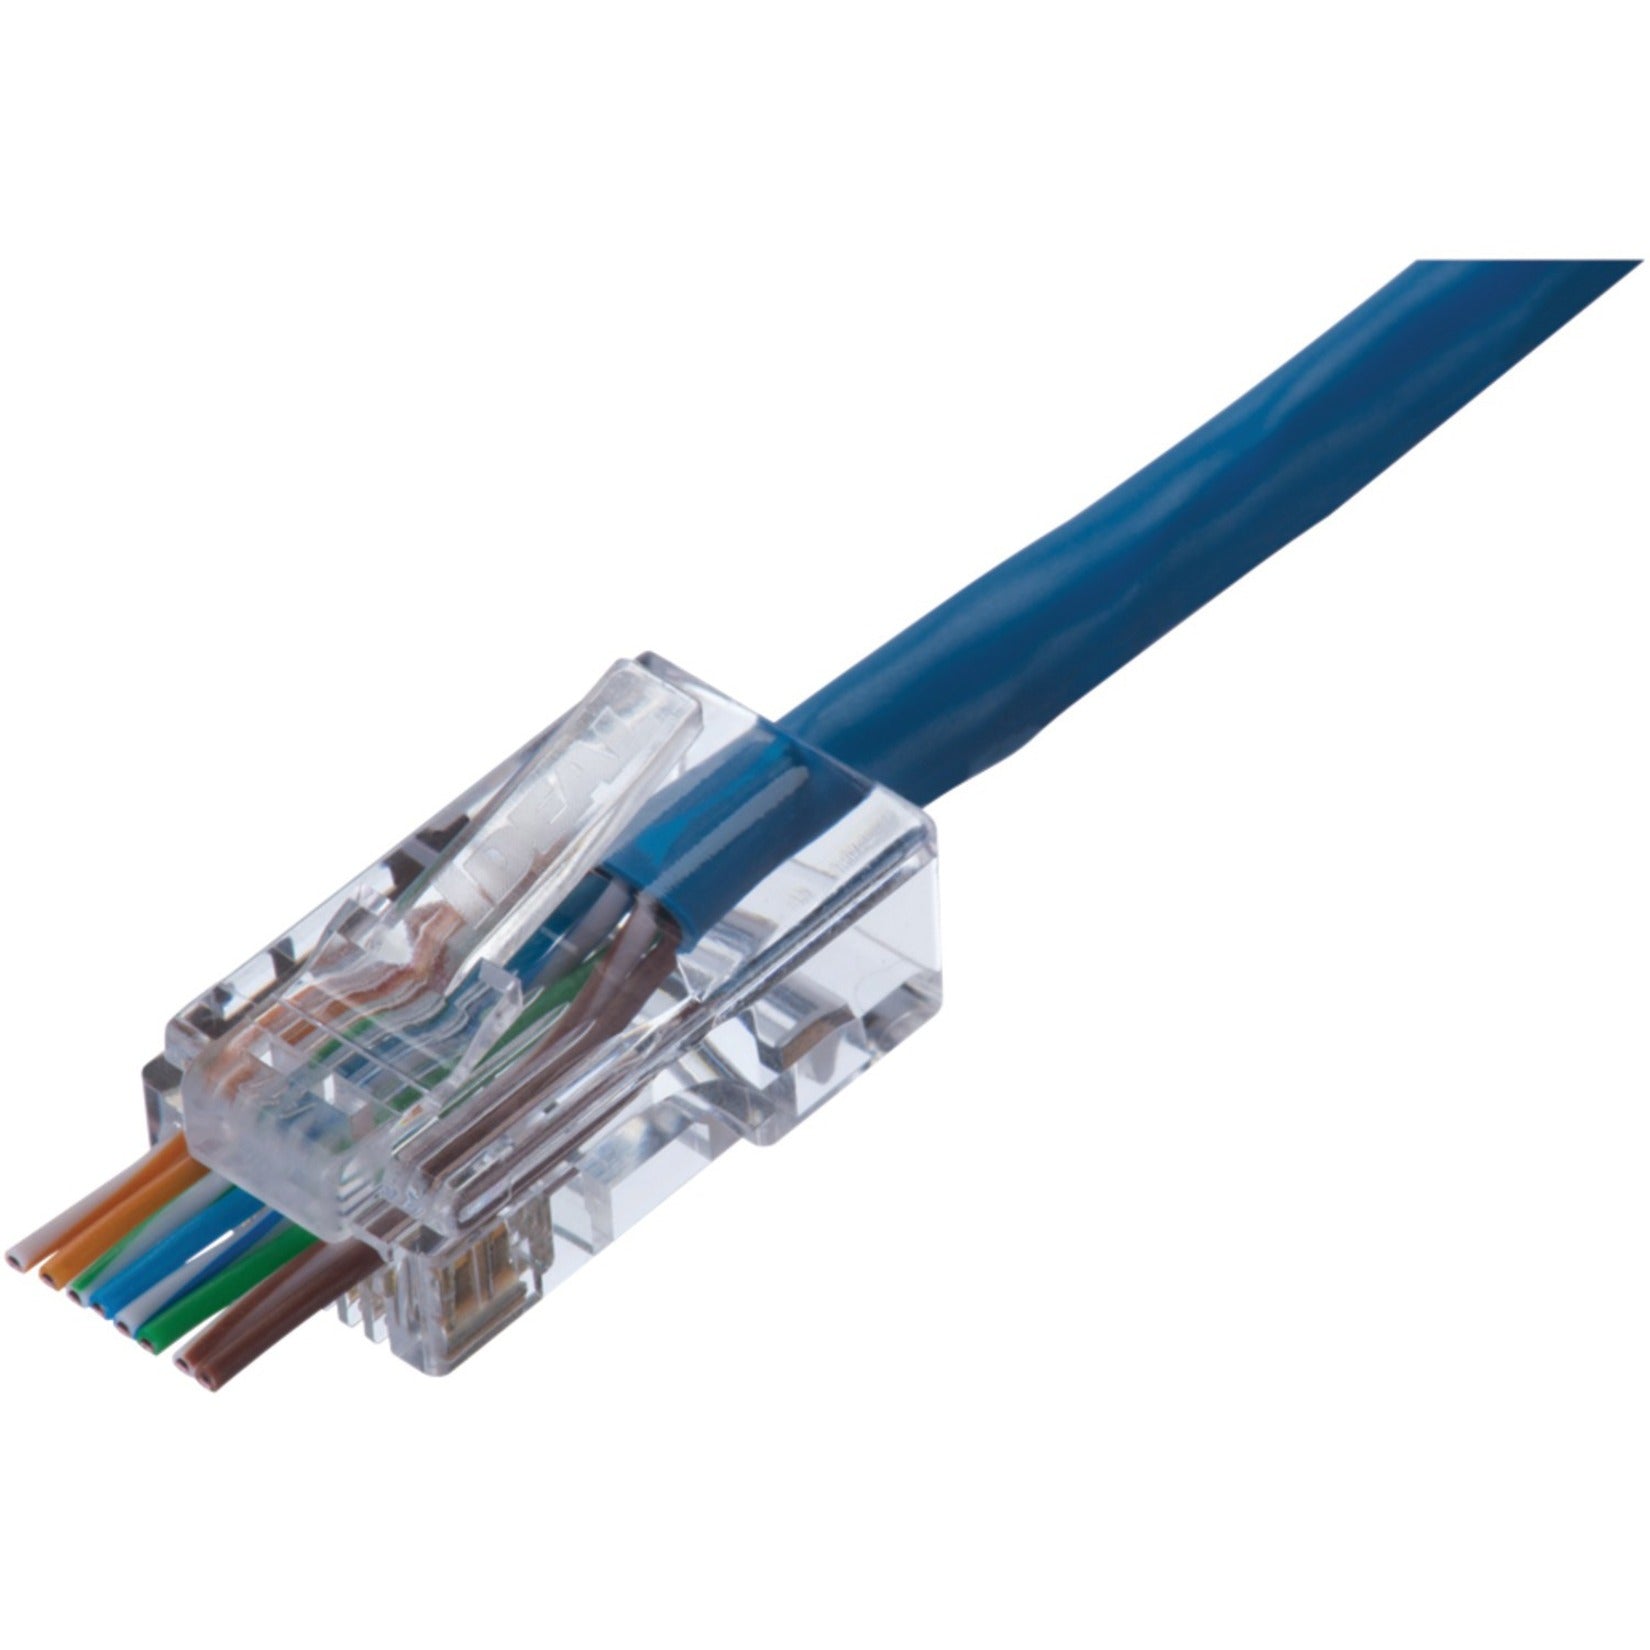 IDEAL 85-371 Feed-Thru CAT5e RJ-45 8P8C Modular Stecker Netzwerkverbinder mit Zugentlastung